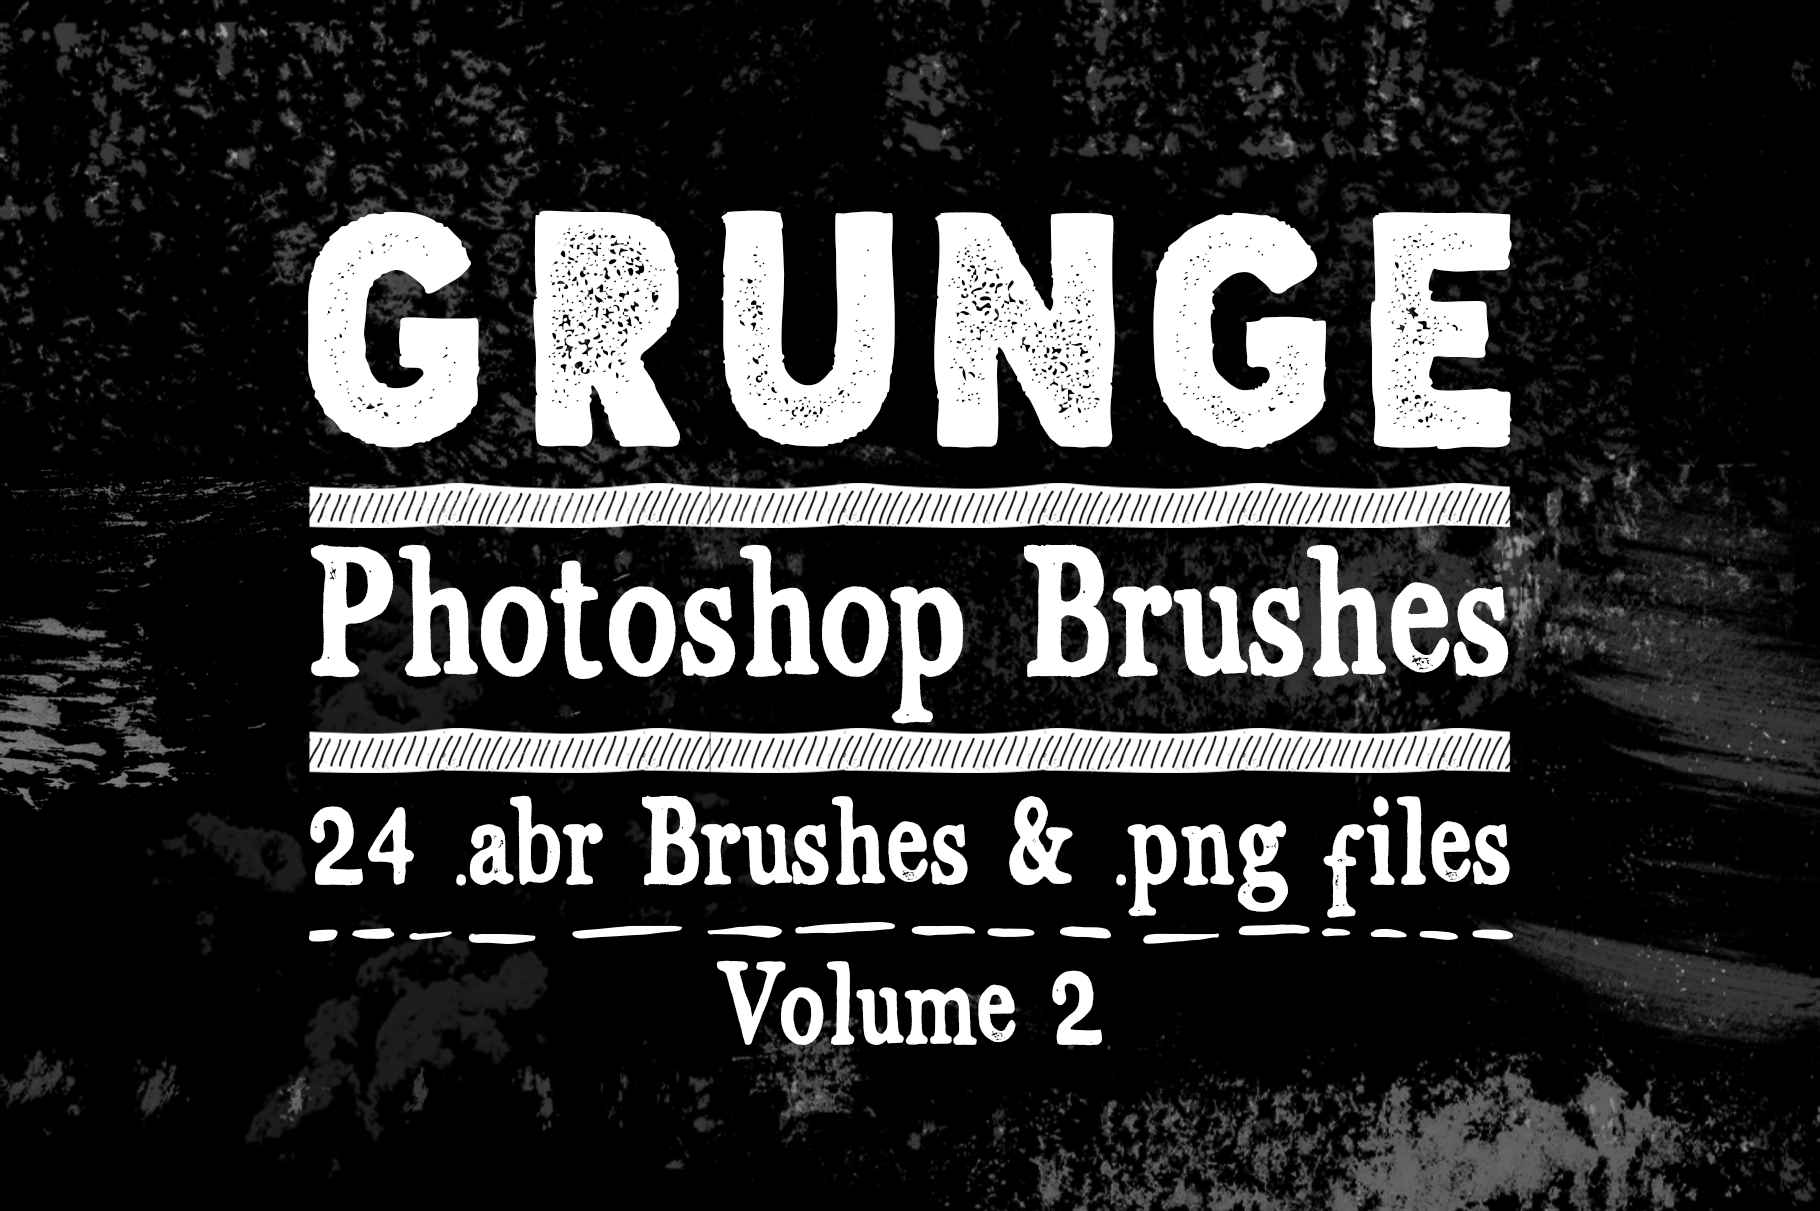 Grunge Photoshop Brushes by Clikchic Designs